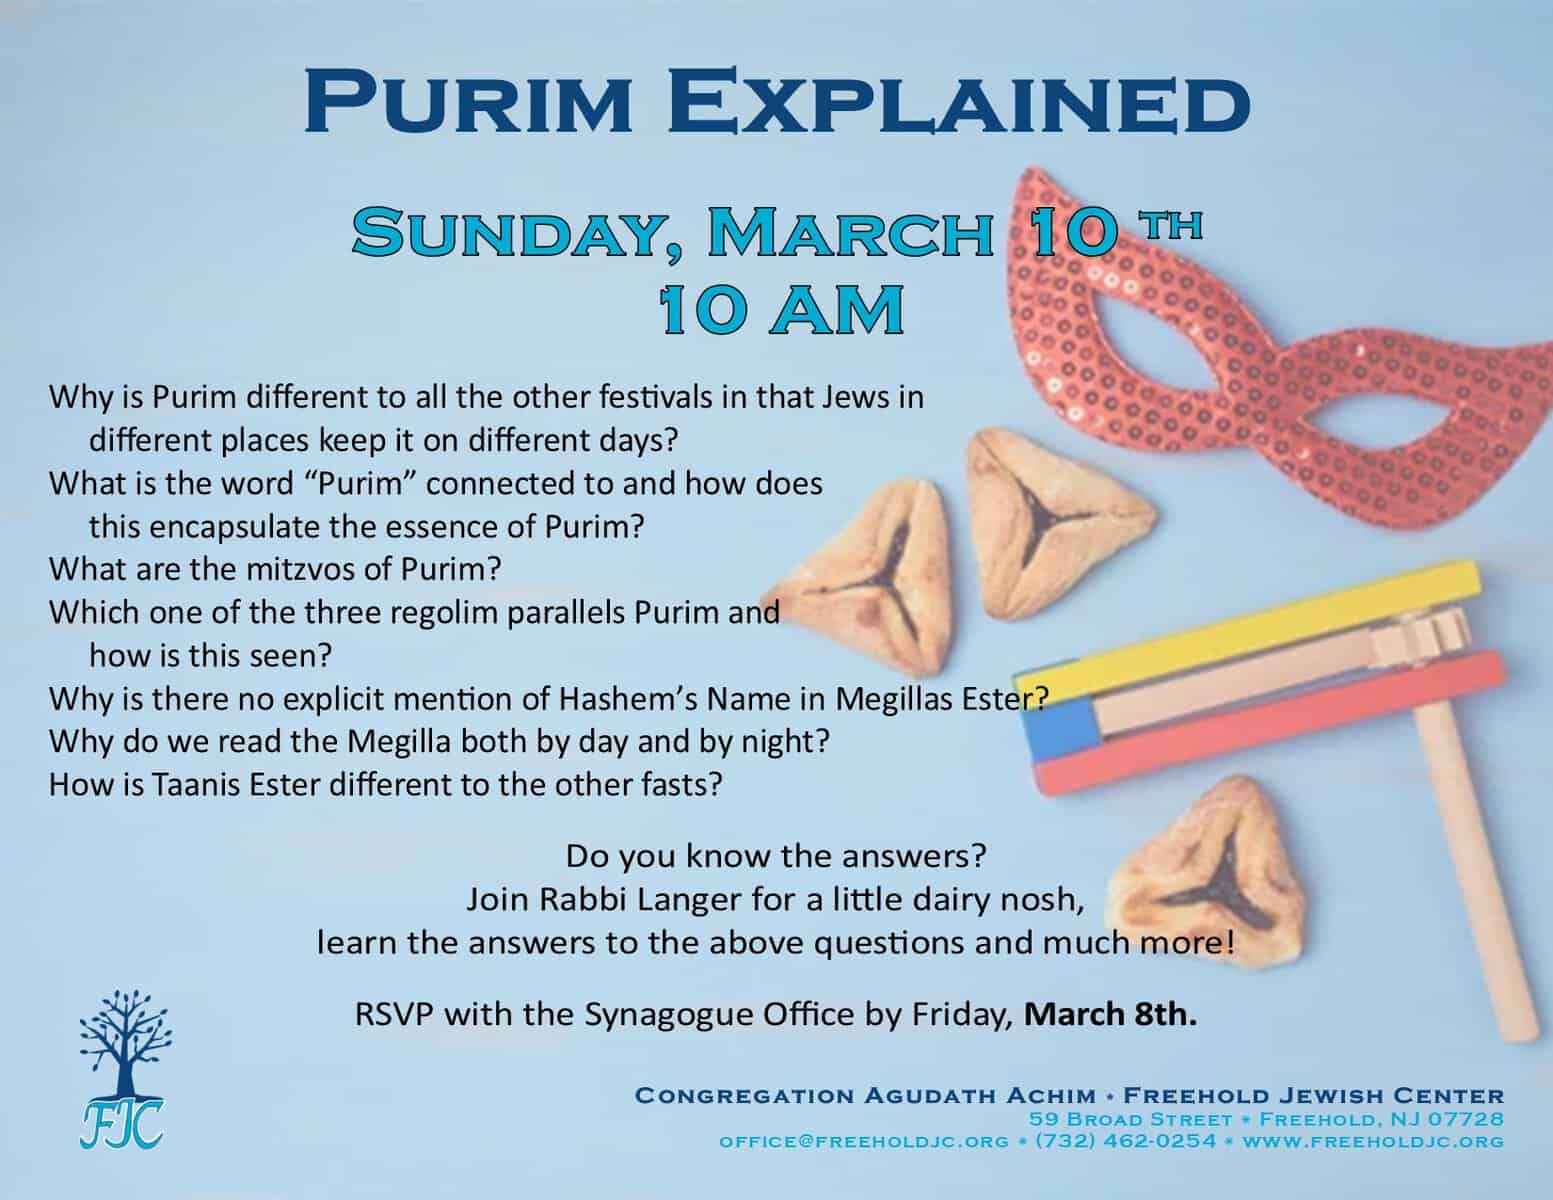 Purim Explained by Rabbi Langer